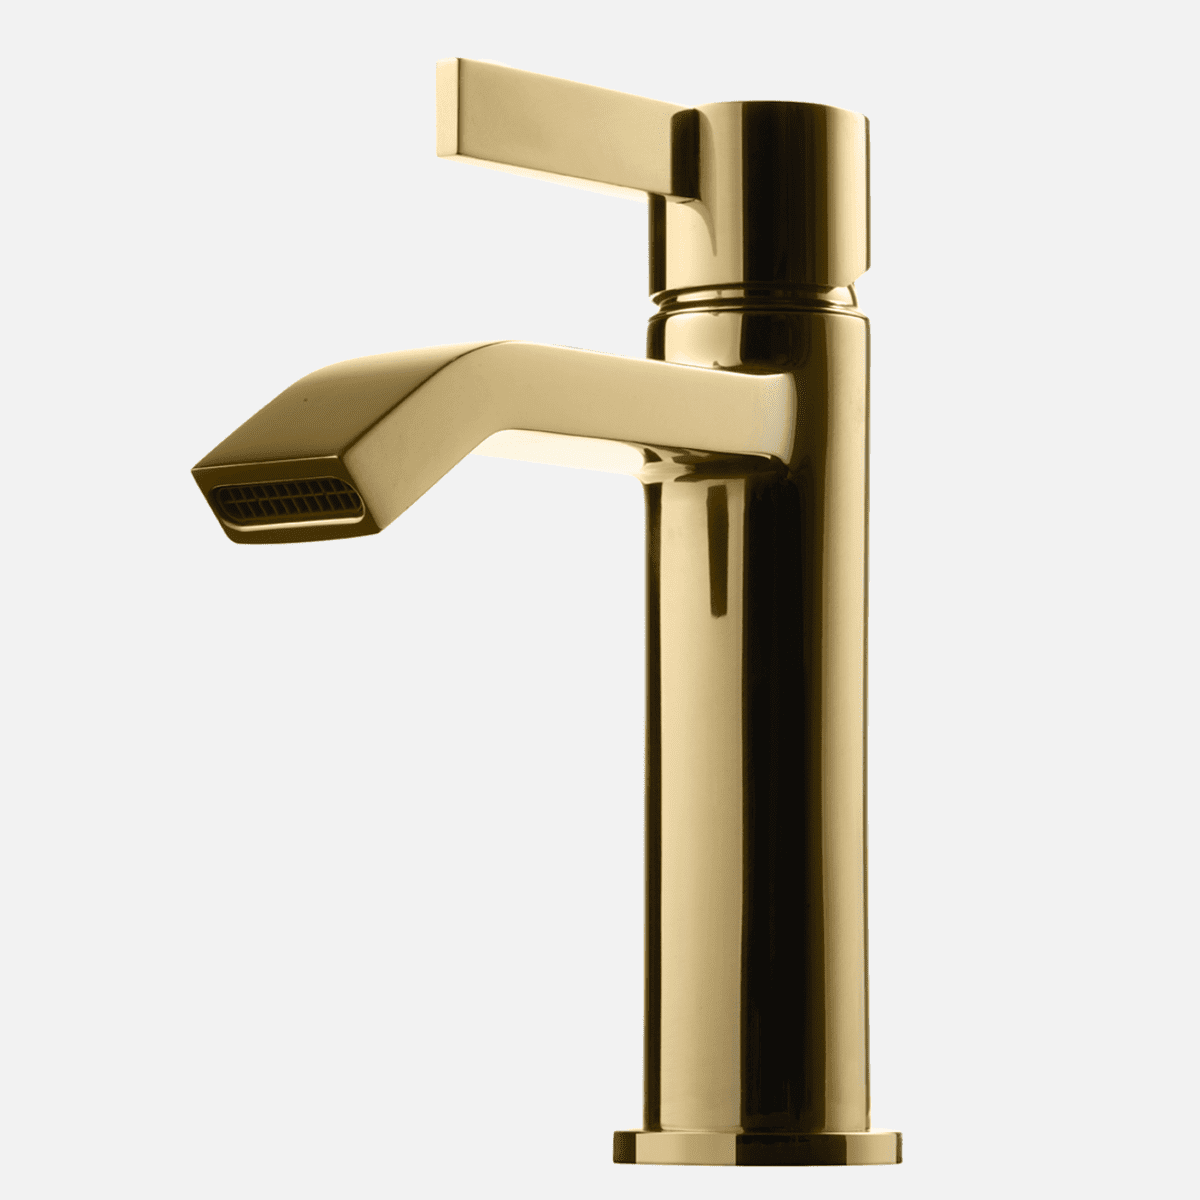 Se Tapwell ARM071 håndvaskarmatur - honey gold hos Bad&Design